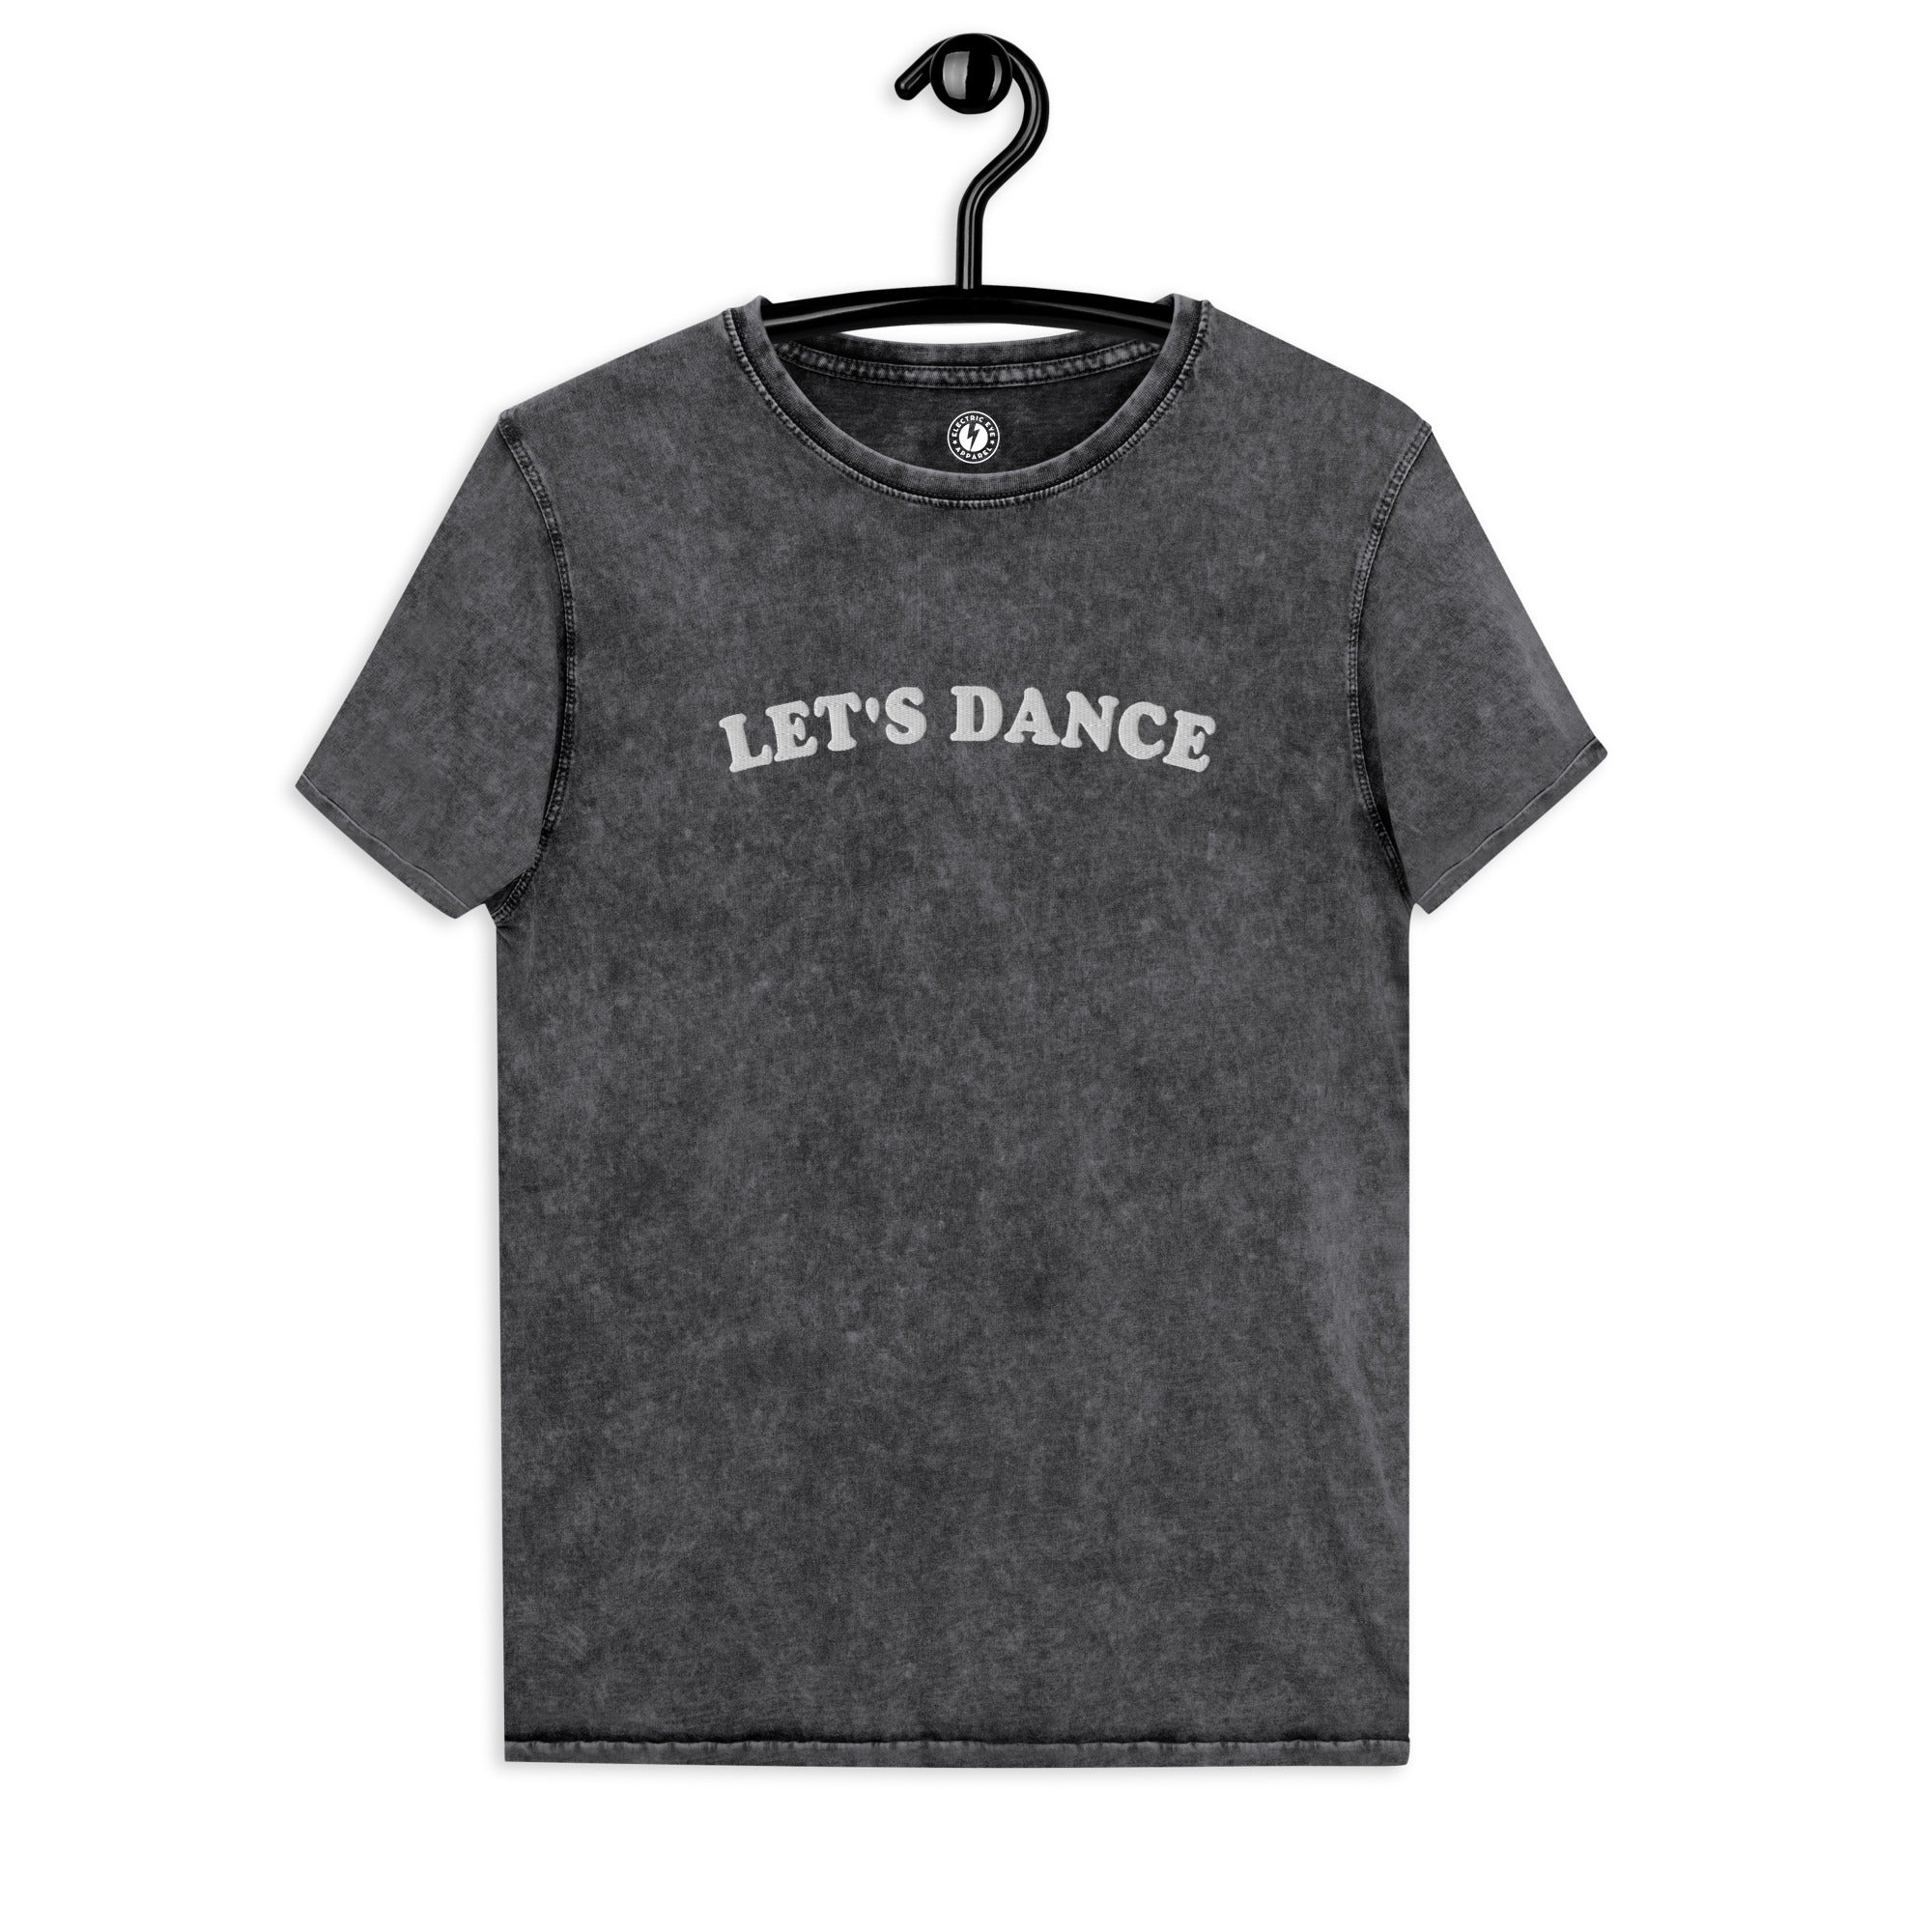 LET'S DANCE Embroidered Vintage Aged Denim Style Unisex T-Shirt - White Thread